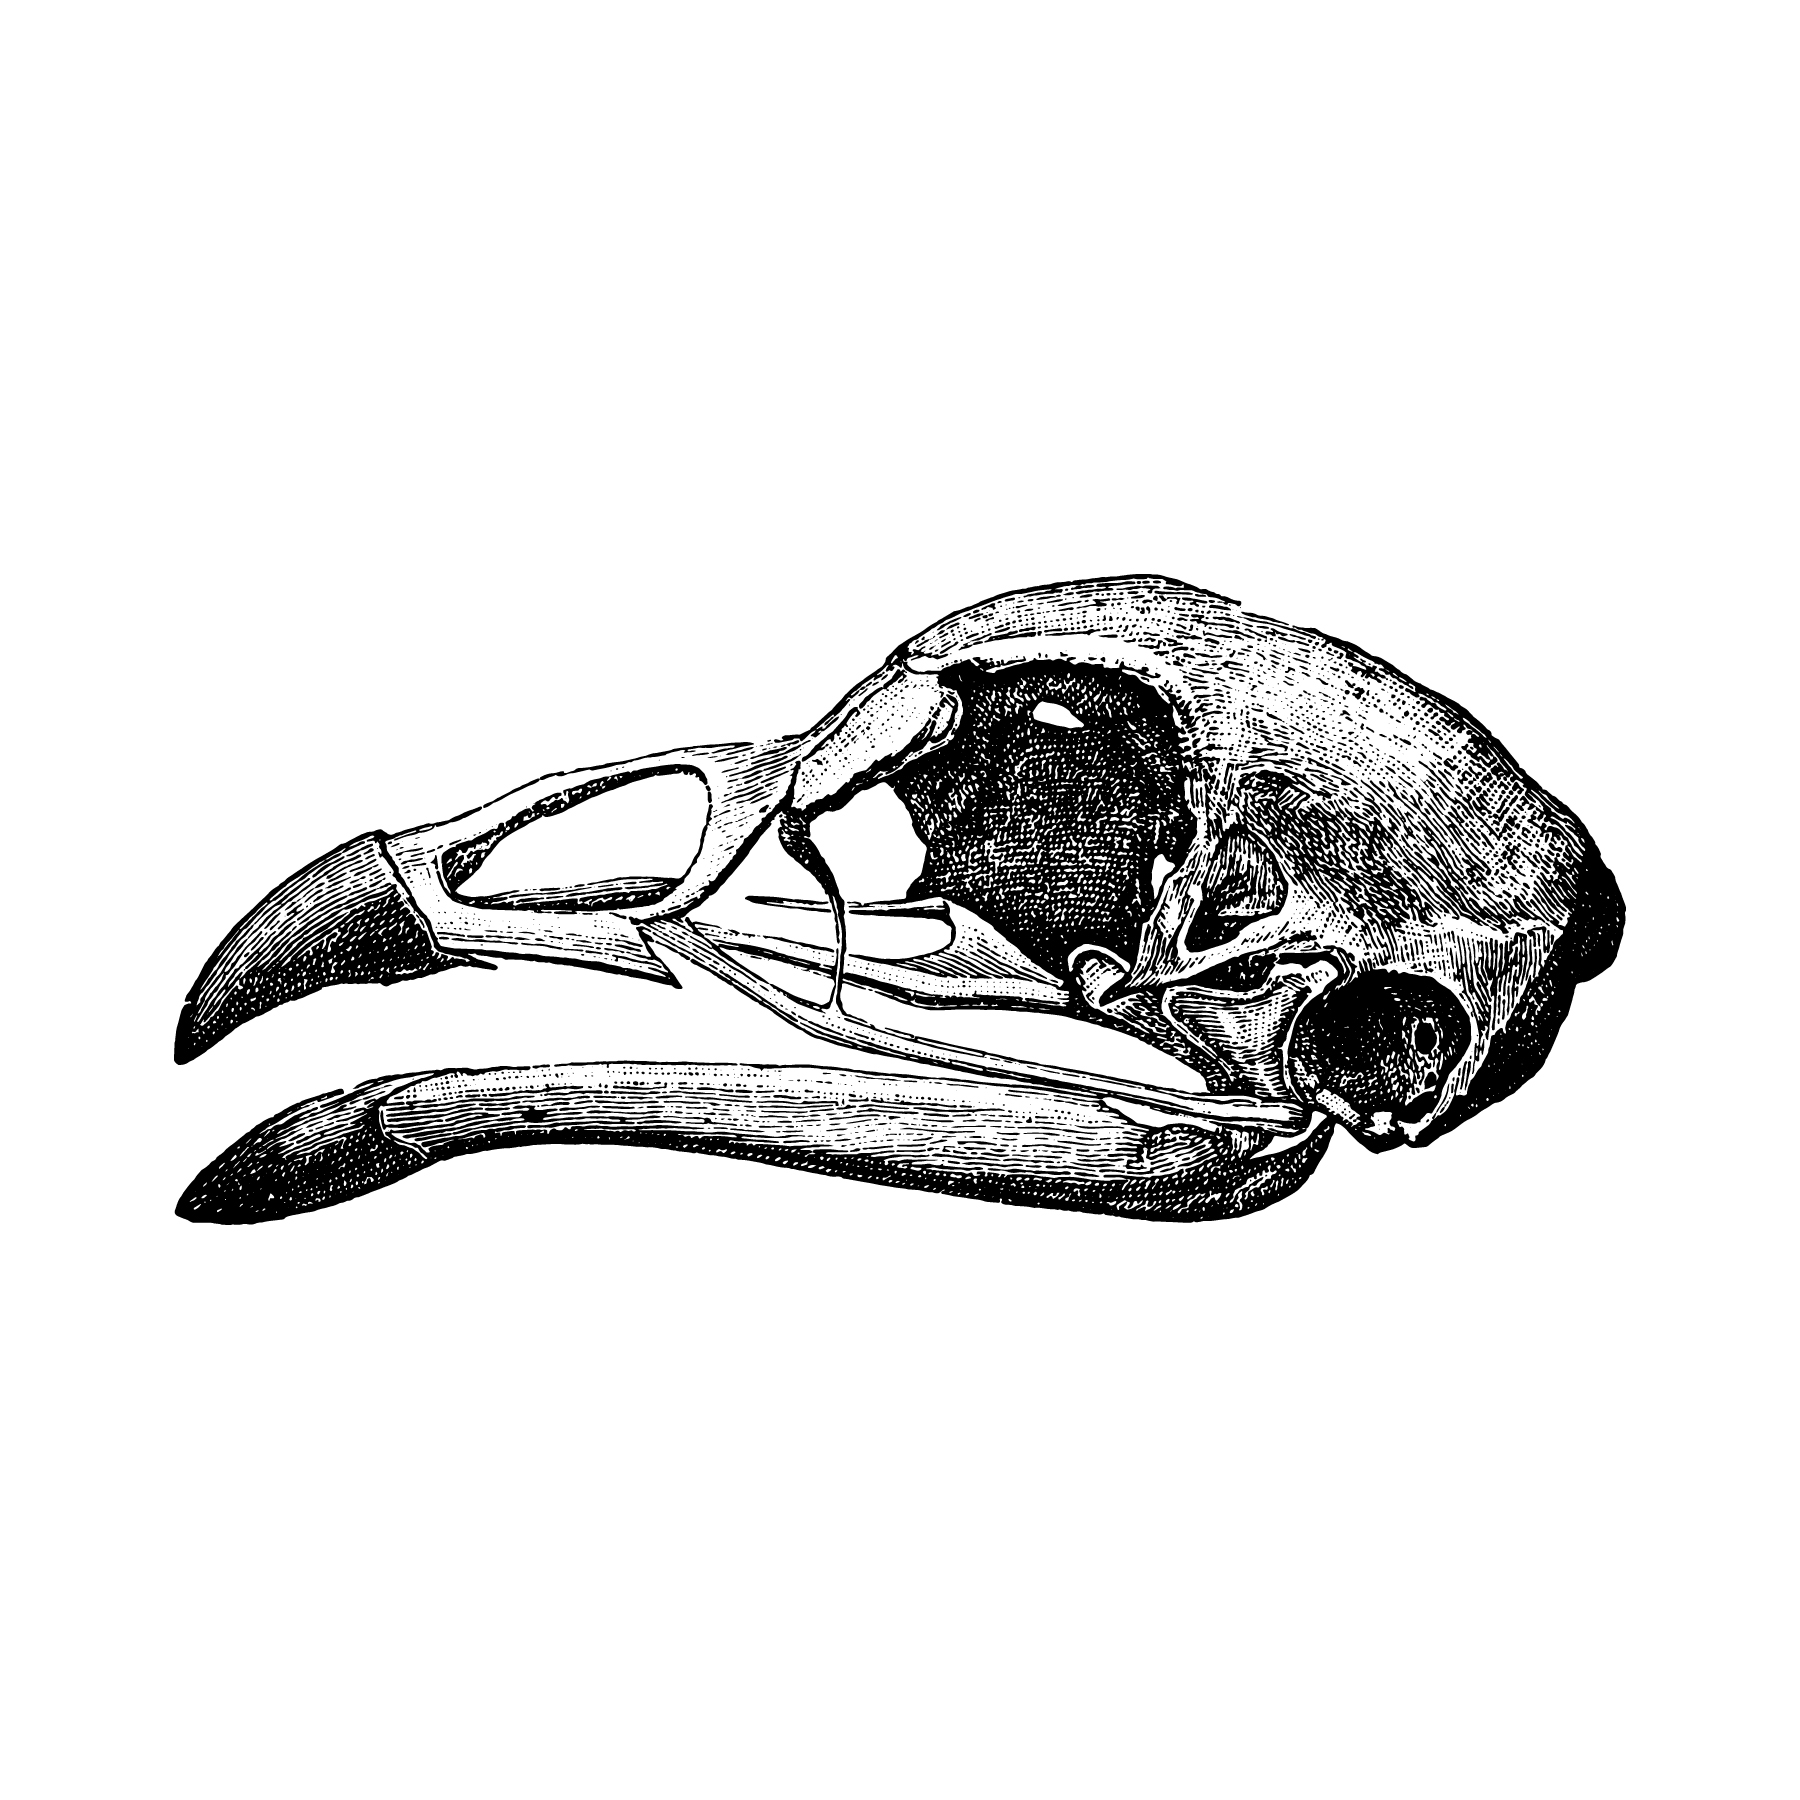 Skull of the chicken, vintage engraved illustration